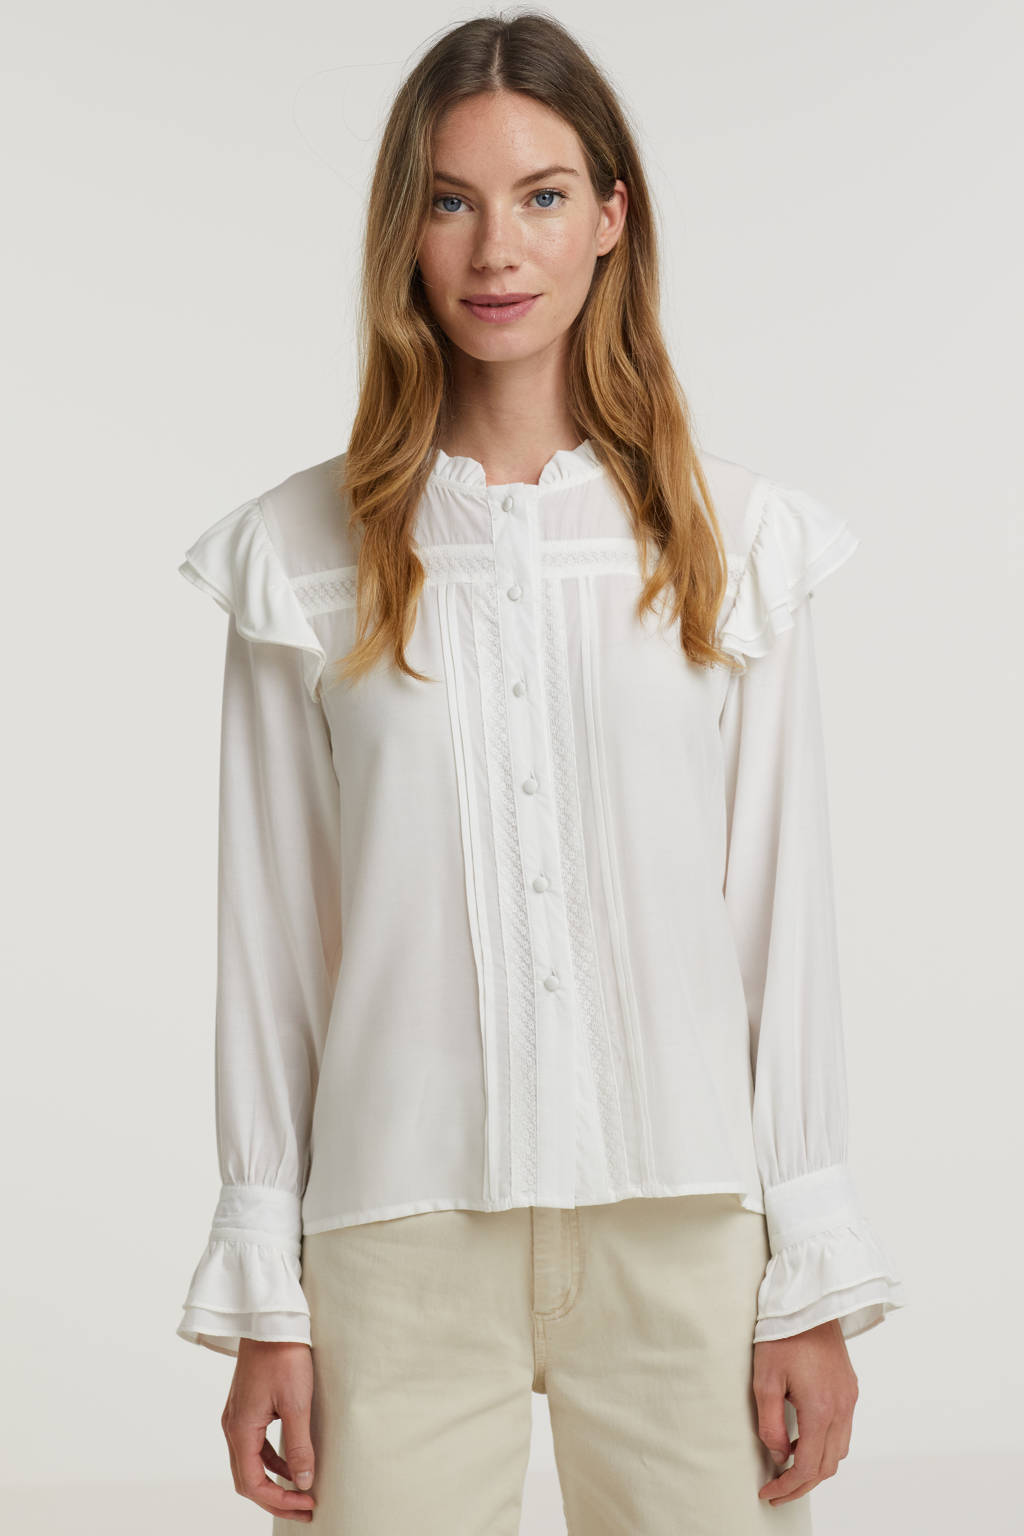 Witte dames Smashed Lemon blouse Rose van polyester met lange mouwen, mao kraag, knoopsluiting en ruches